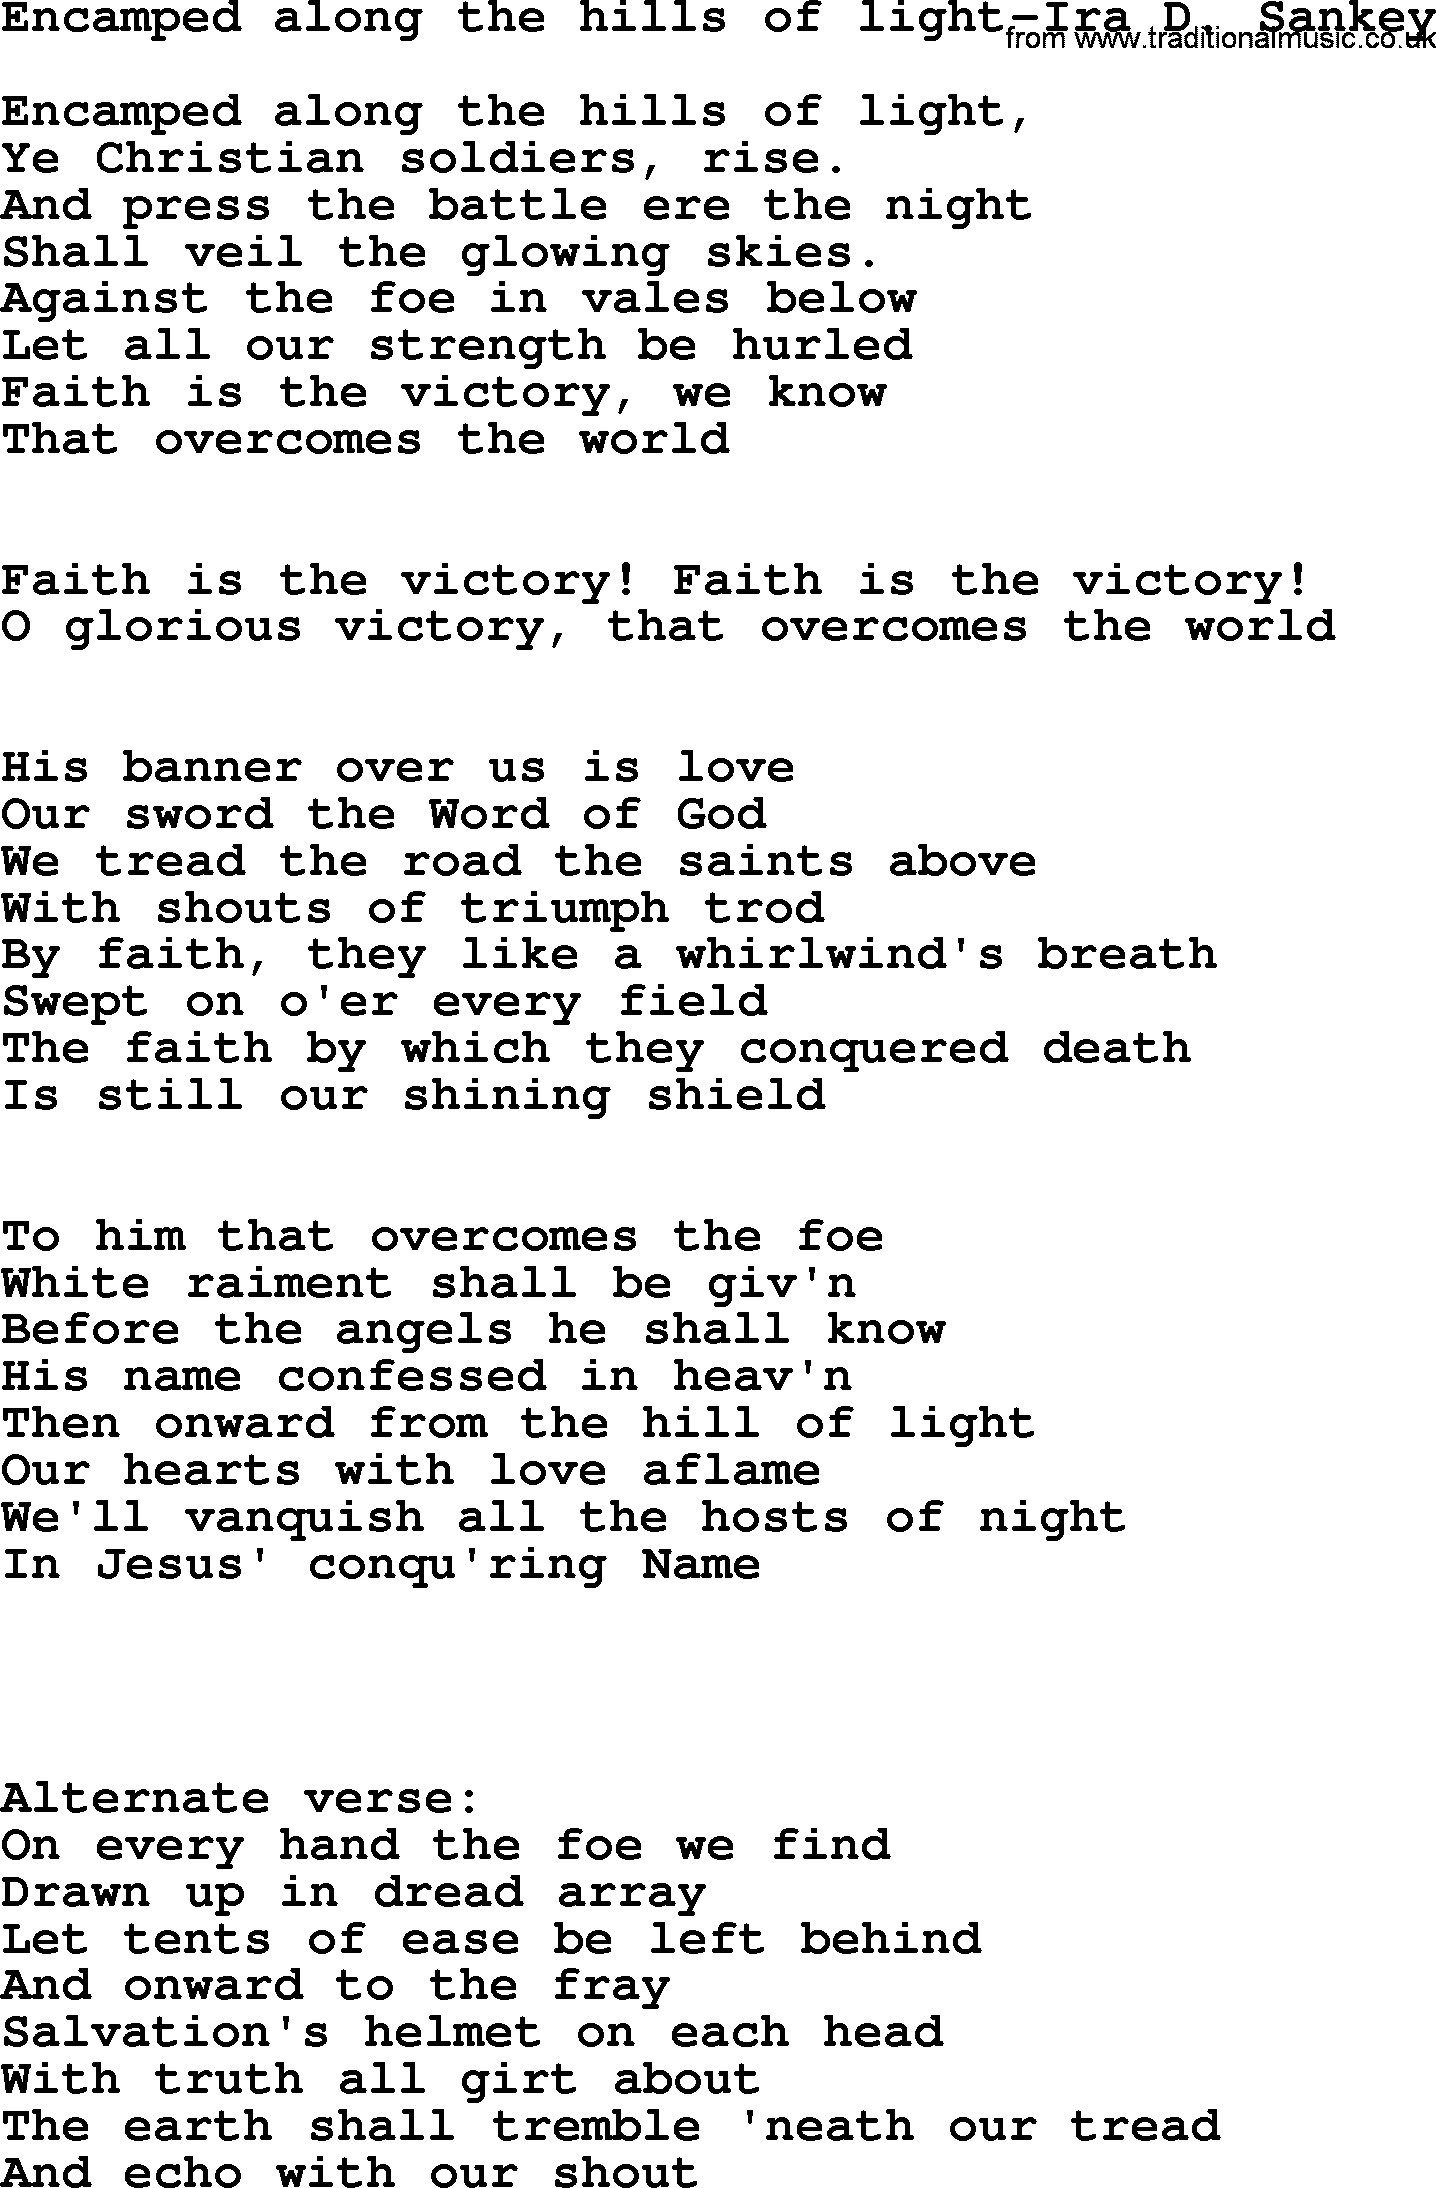 Ira Sankey hymn: Encamped along the hills of light-Ira Sankey, lyrics